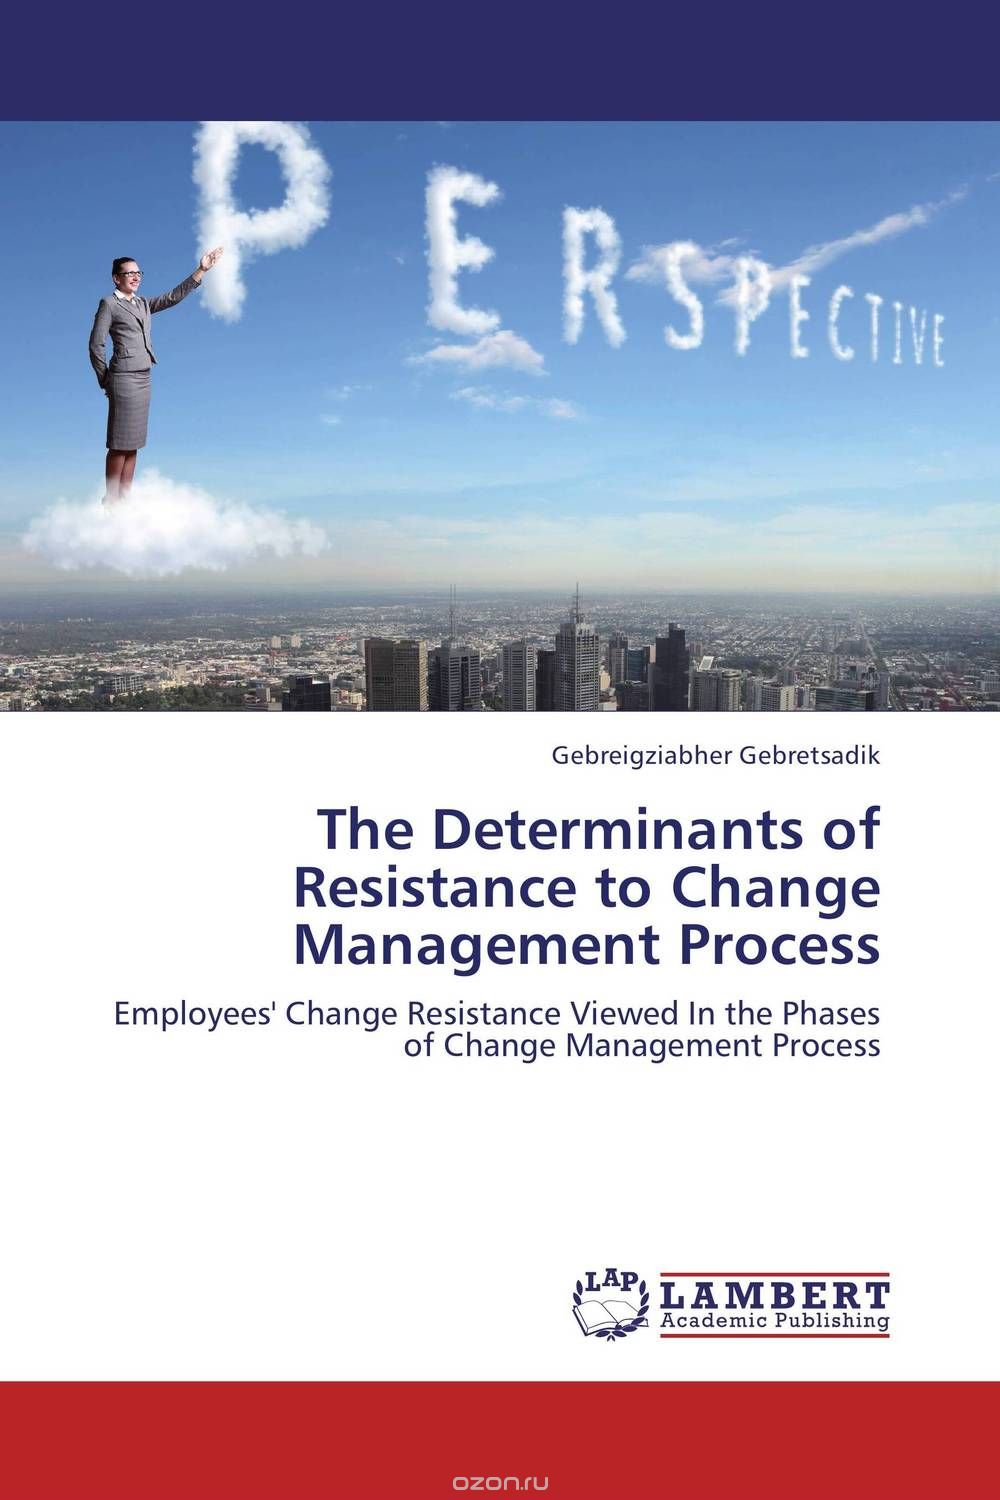 Скачать книгу "The Determinants of Resistance to Change Management Process"